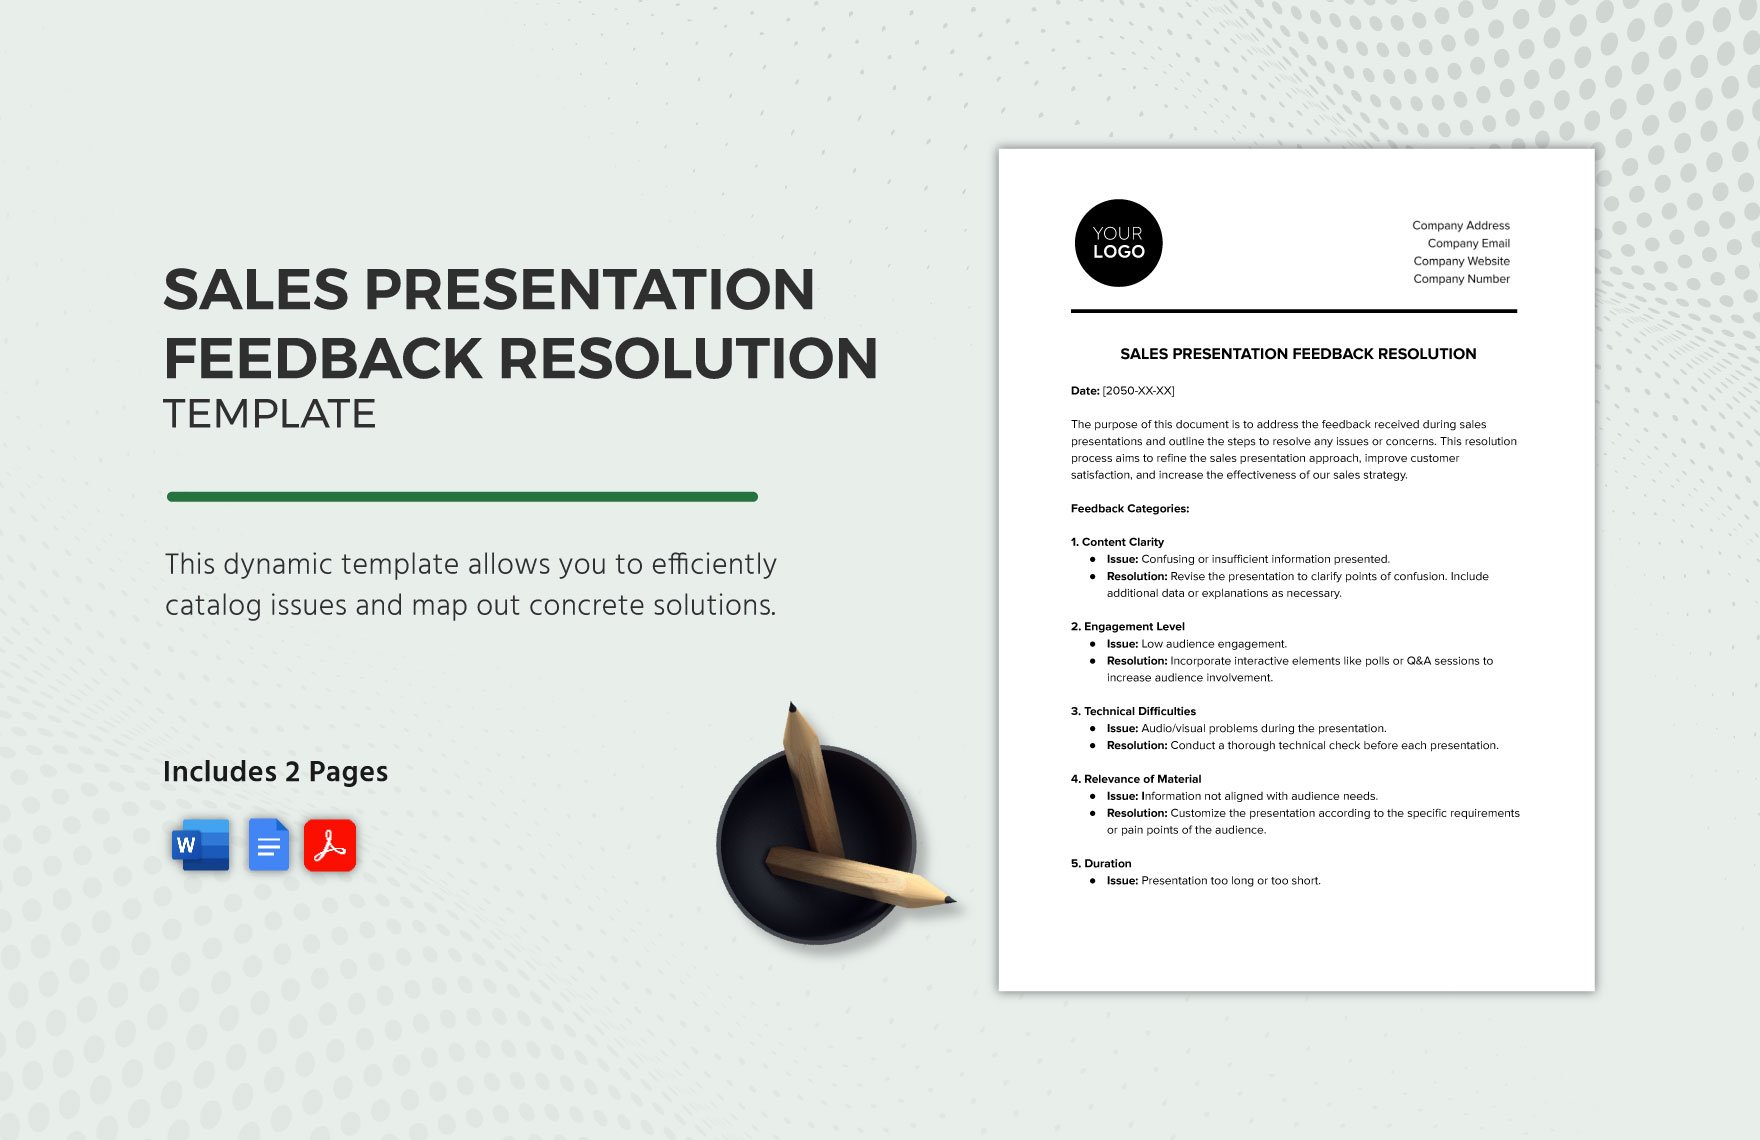 Sales Presentation Feedback Resolution Template in Word, Google Docs, PDF